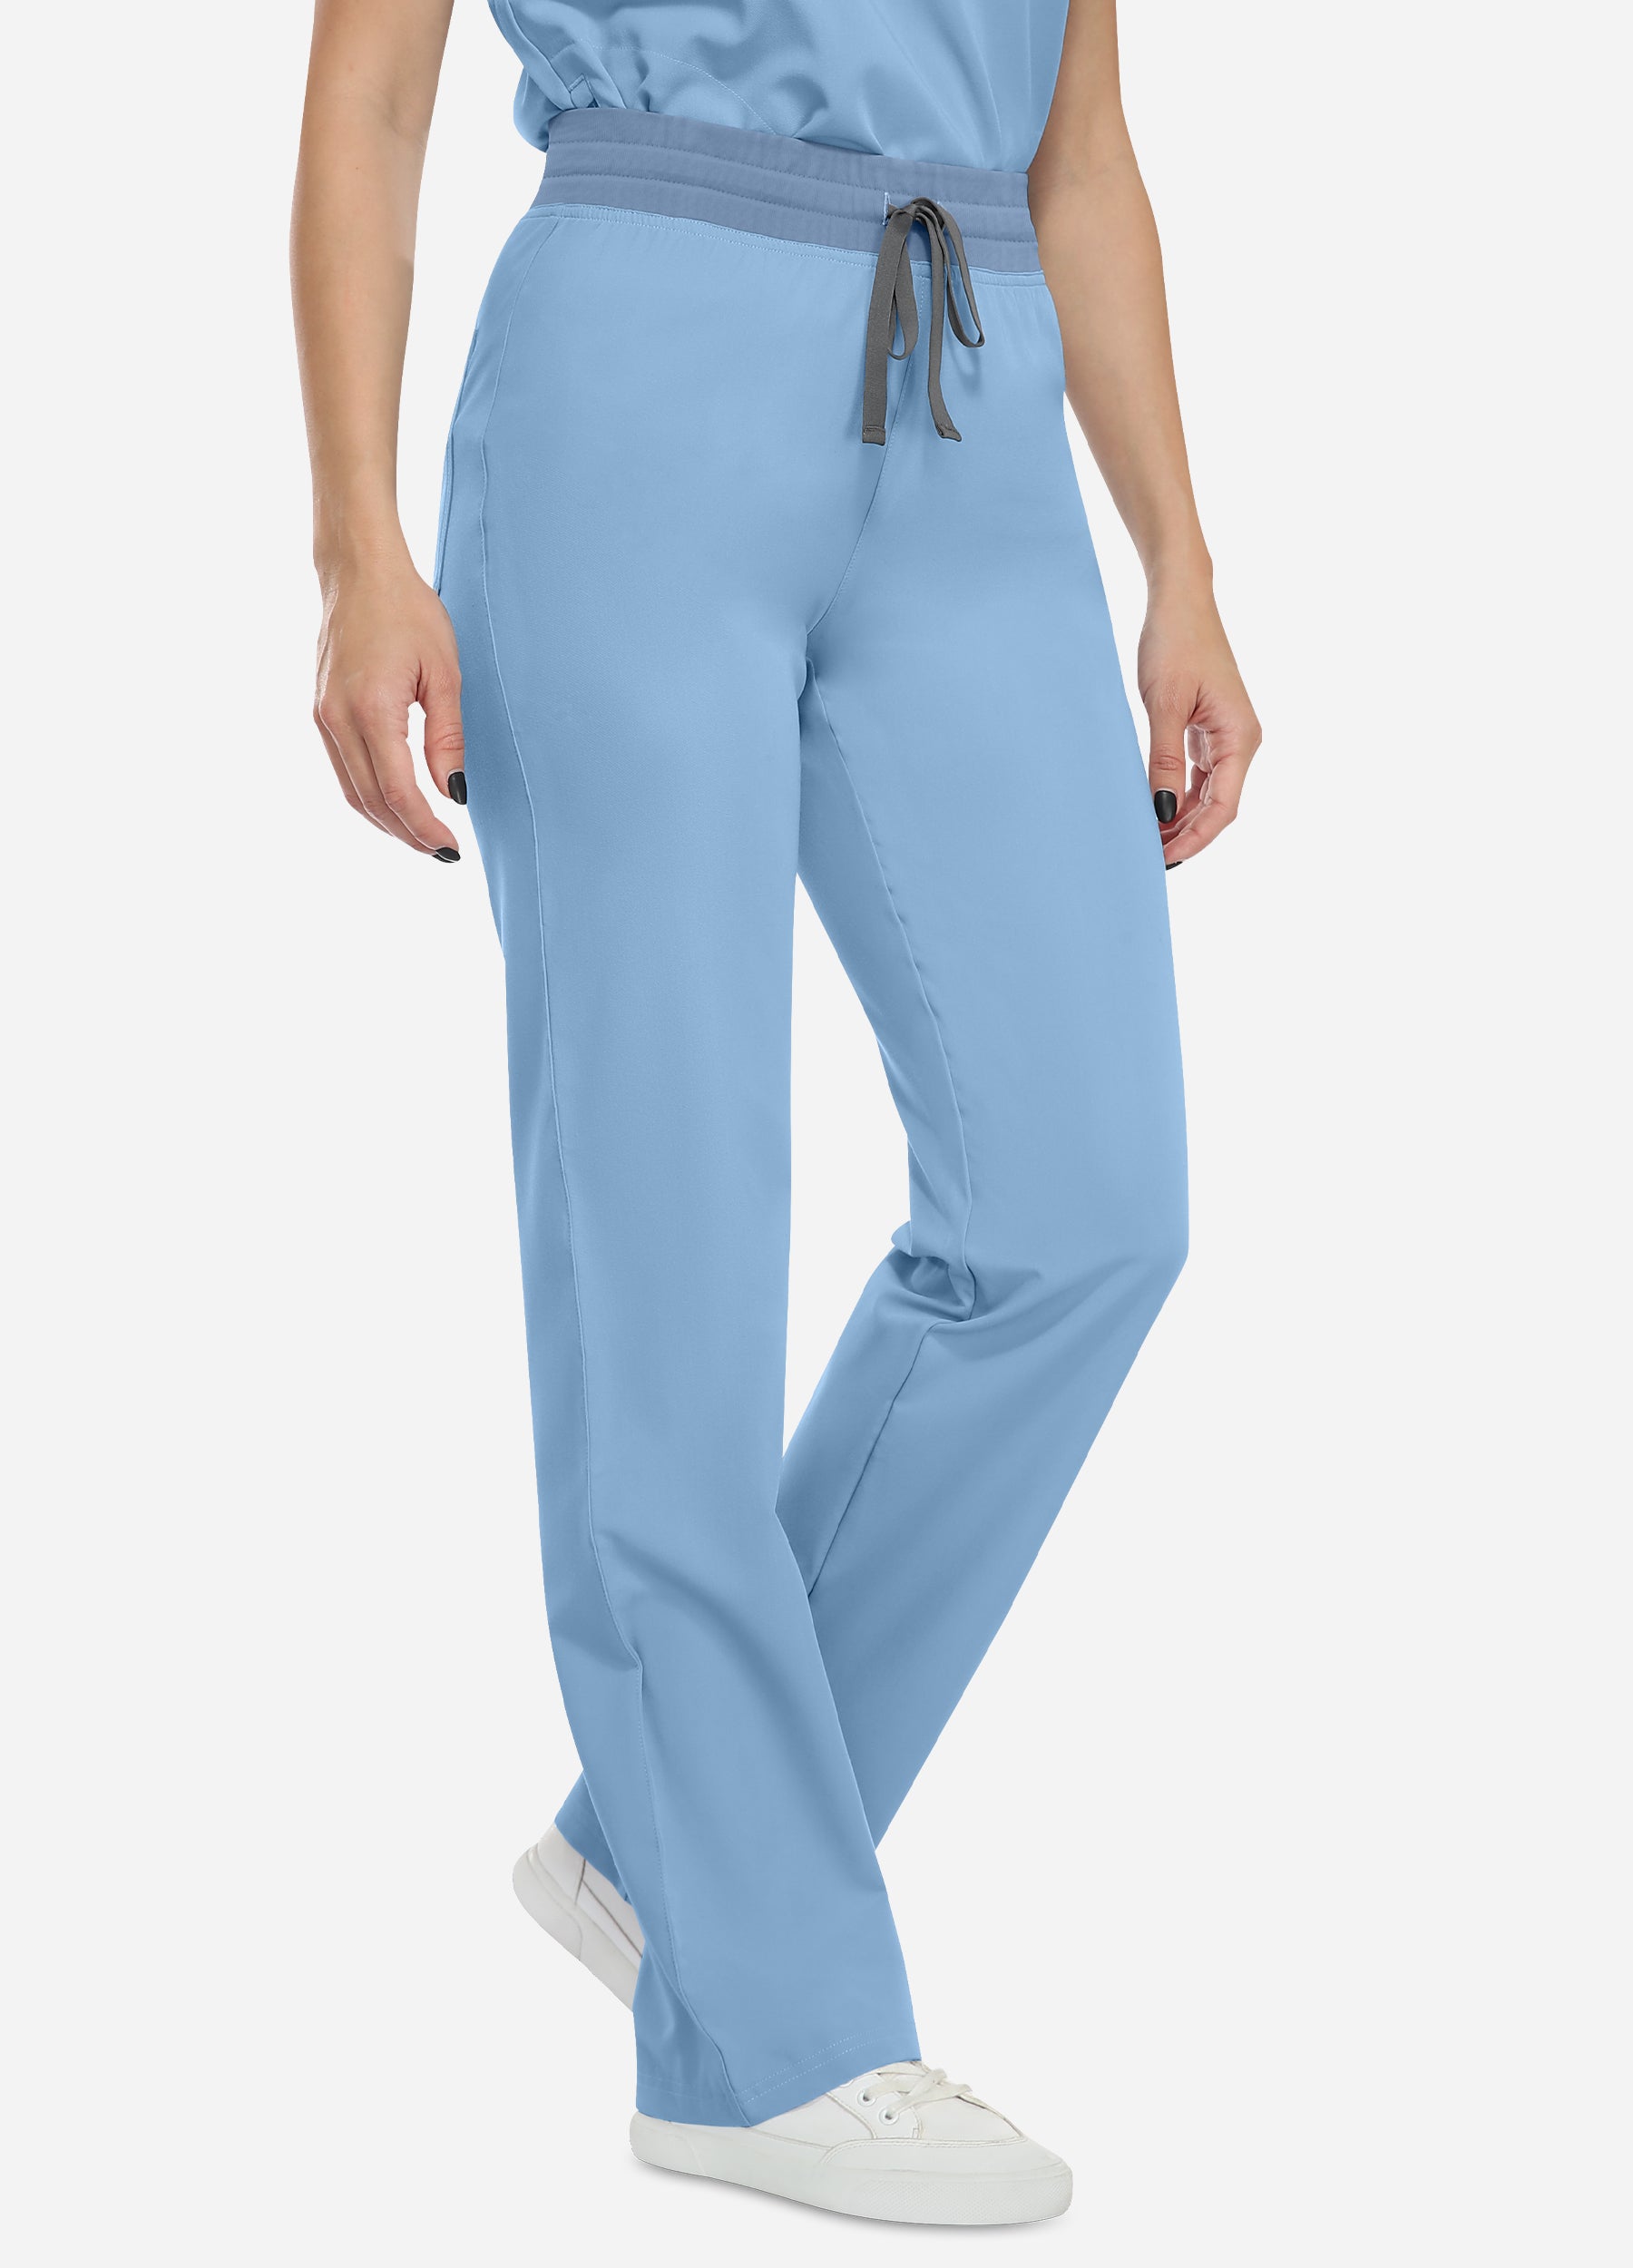 Pantalón médico básico de 2 bolsillos para mujer